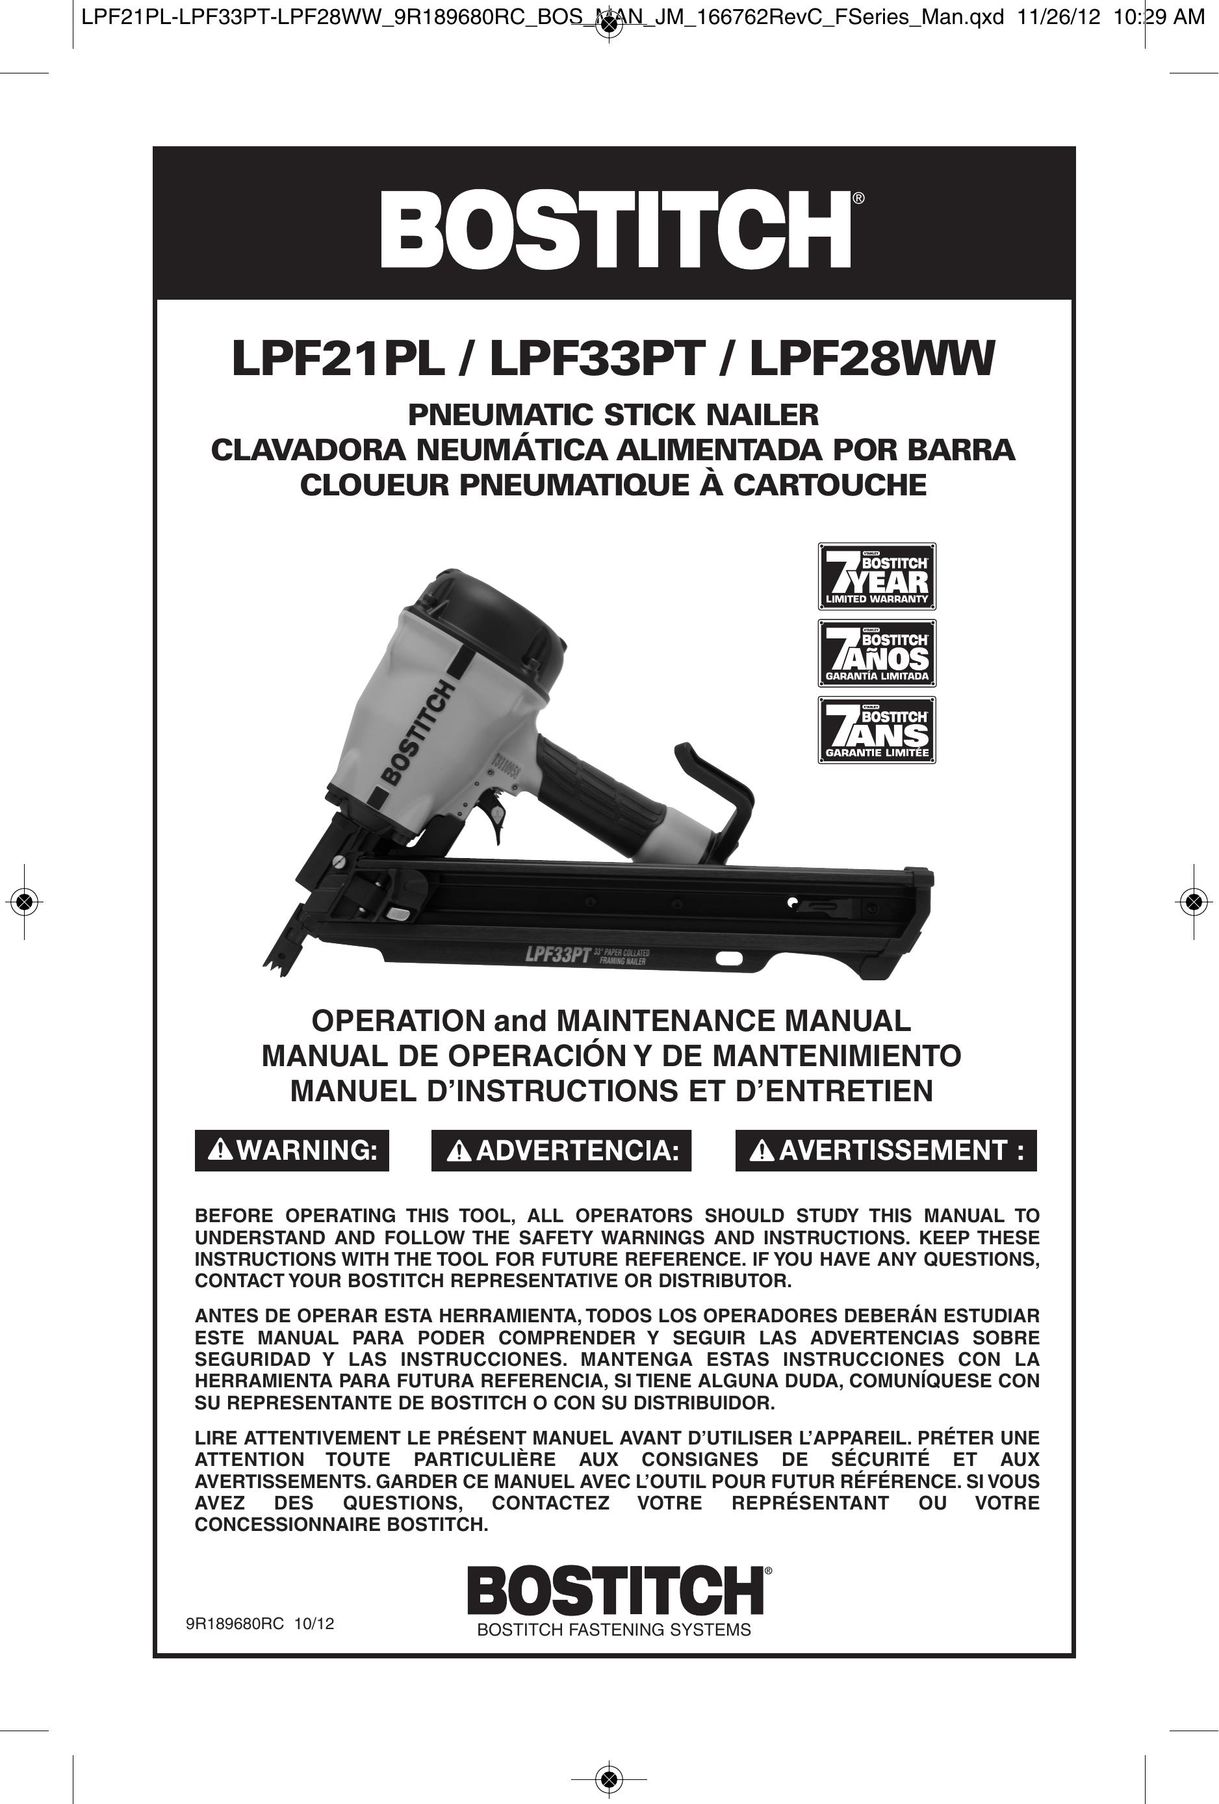 Bostitch LPF21PL Nail Gun User Manual